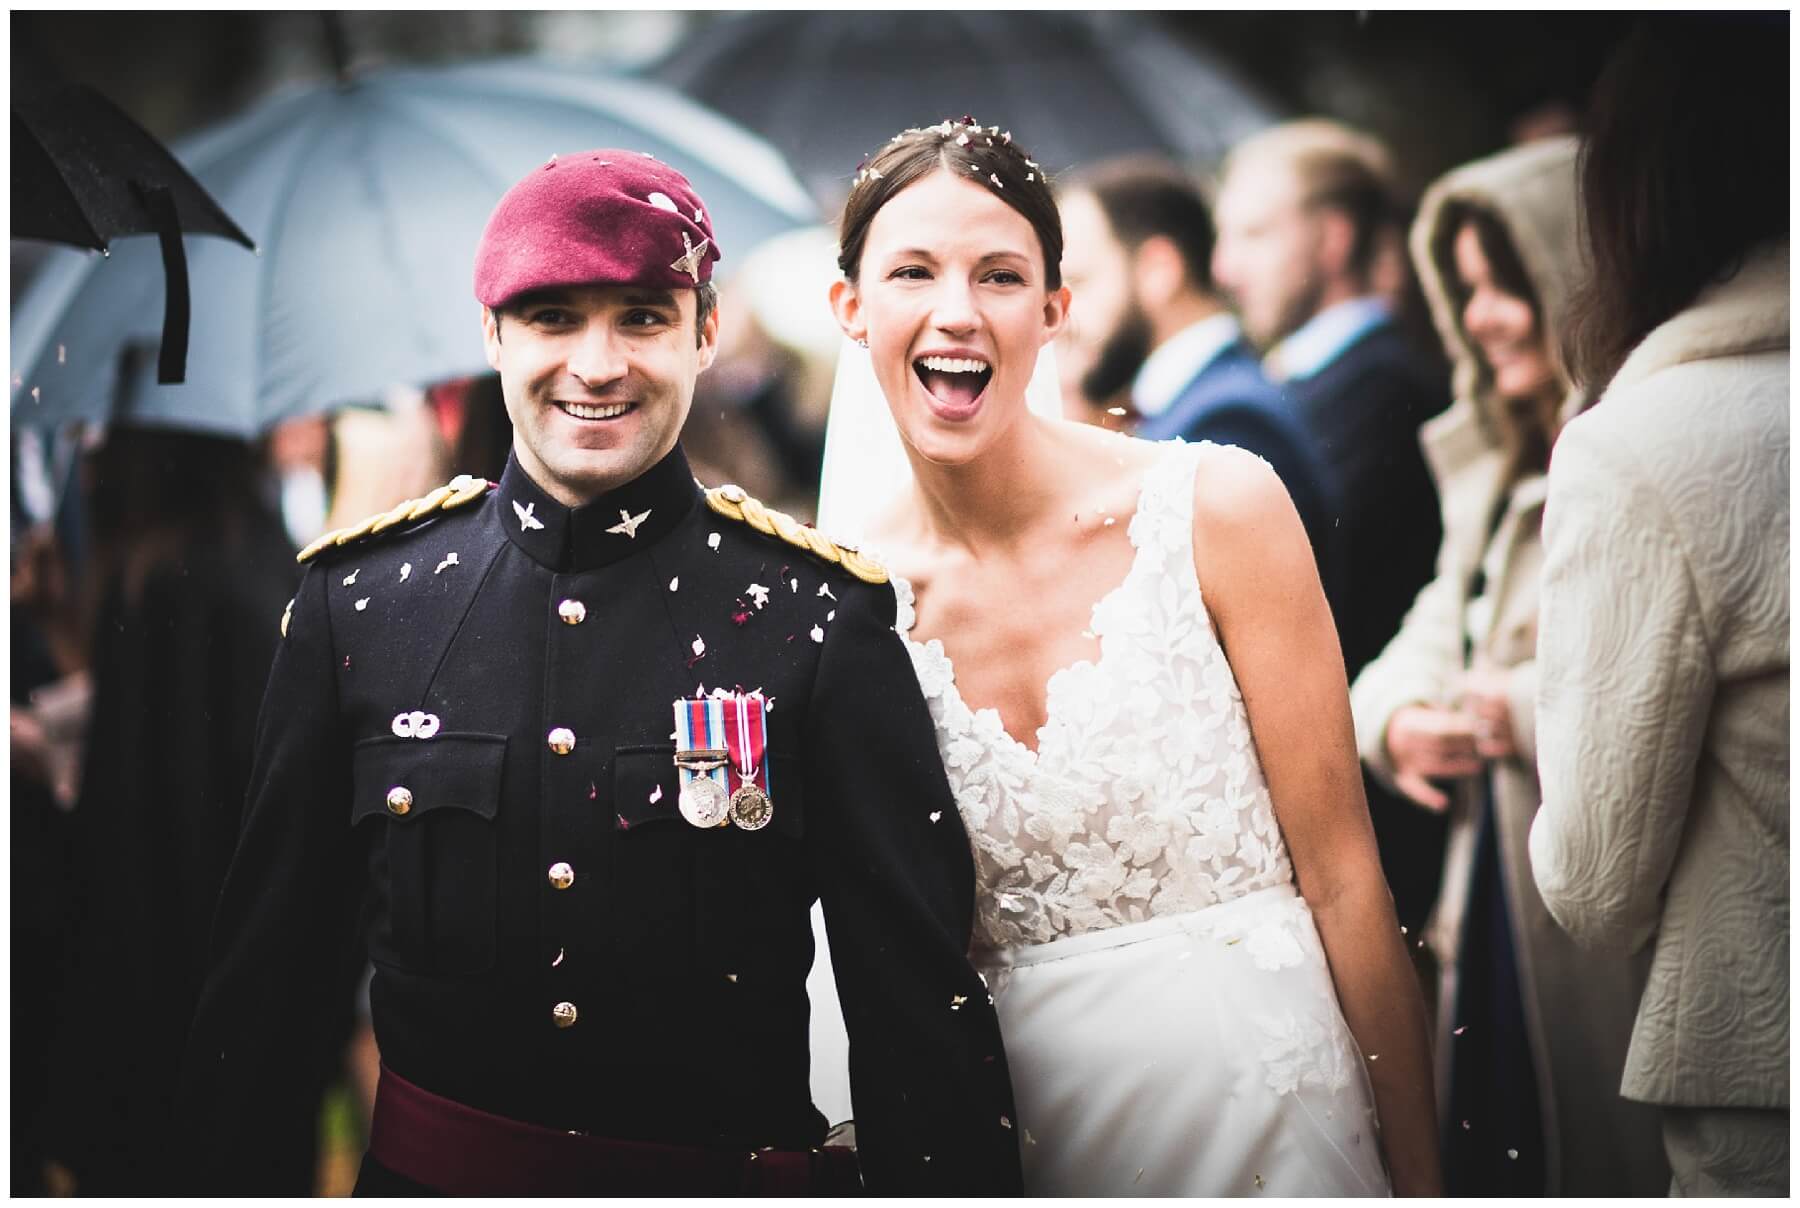 london-wedding-photographer-confetti-smiling-bride.jpg